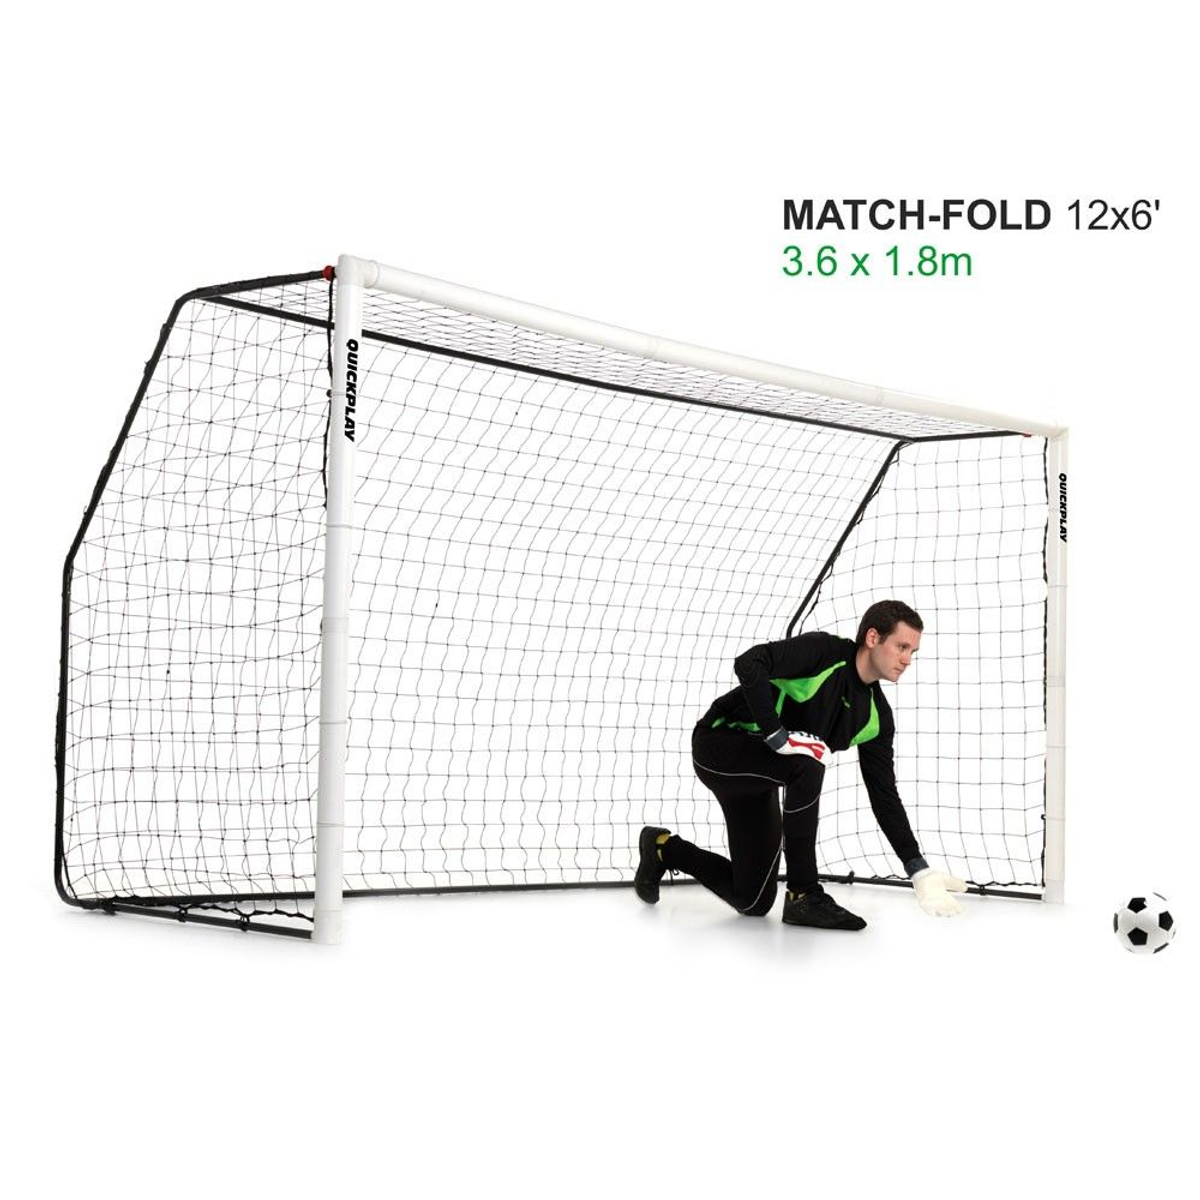  QuickPlay Folding Match Goal 12x6